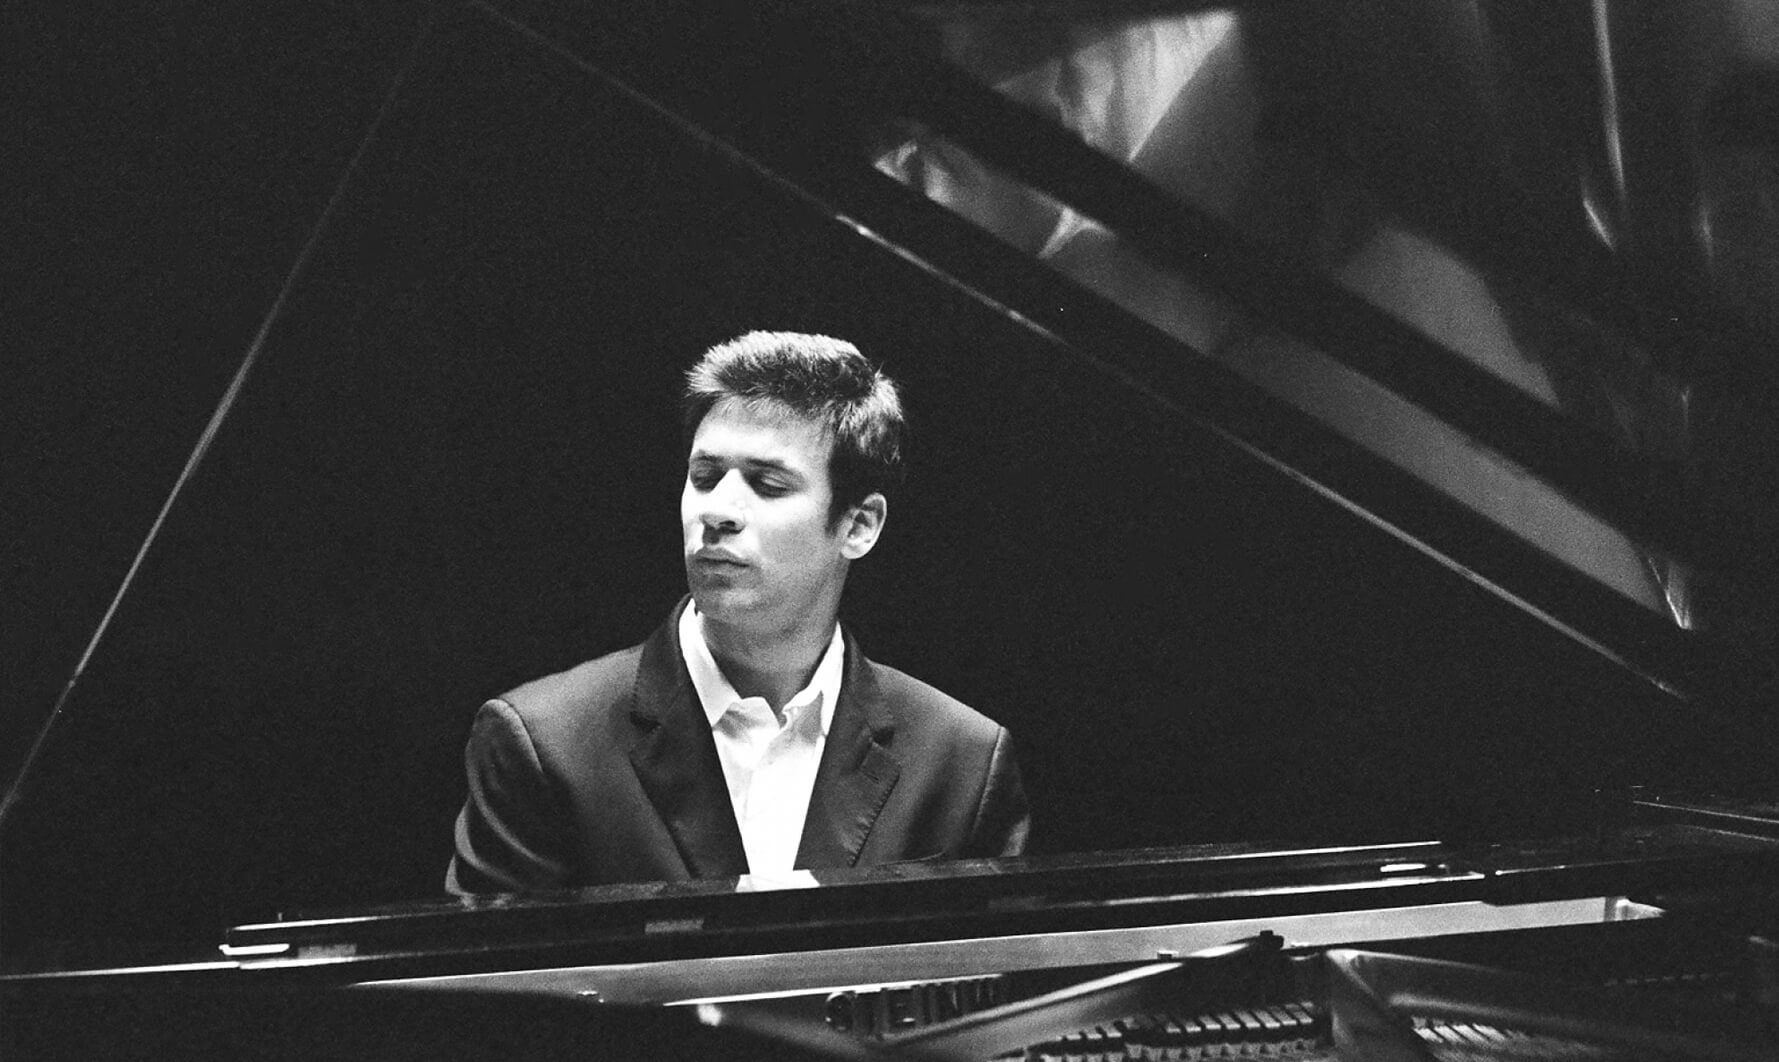 Orquesta Sinfónica Nacional de Colombia - Cristian Budu, piano, Brasil 